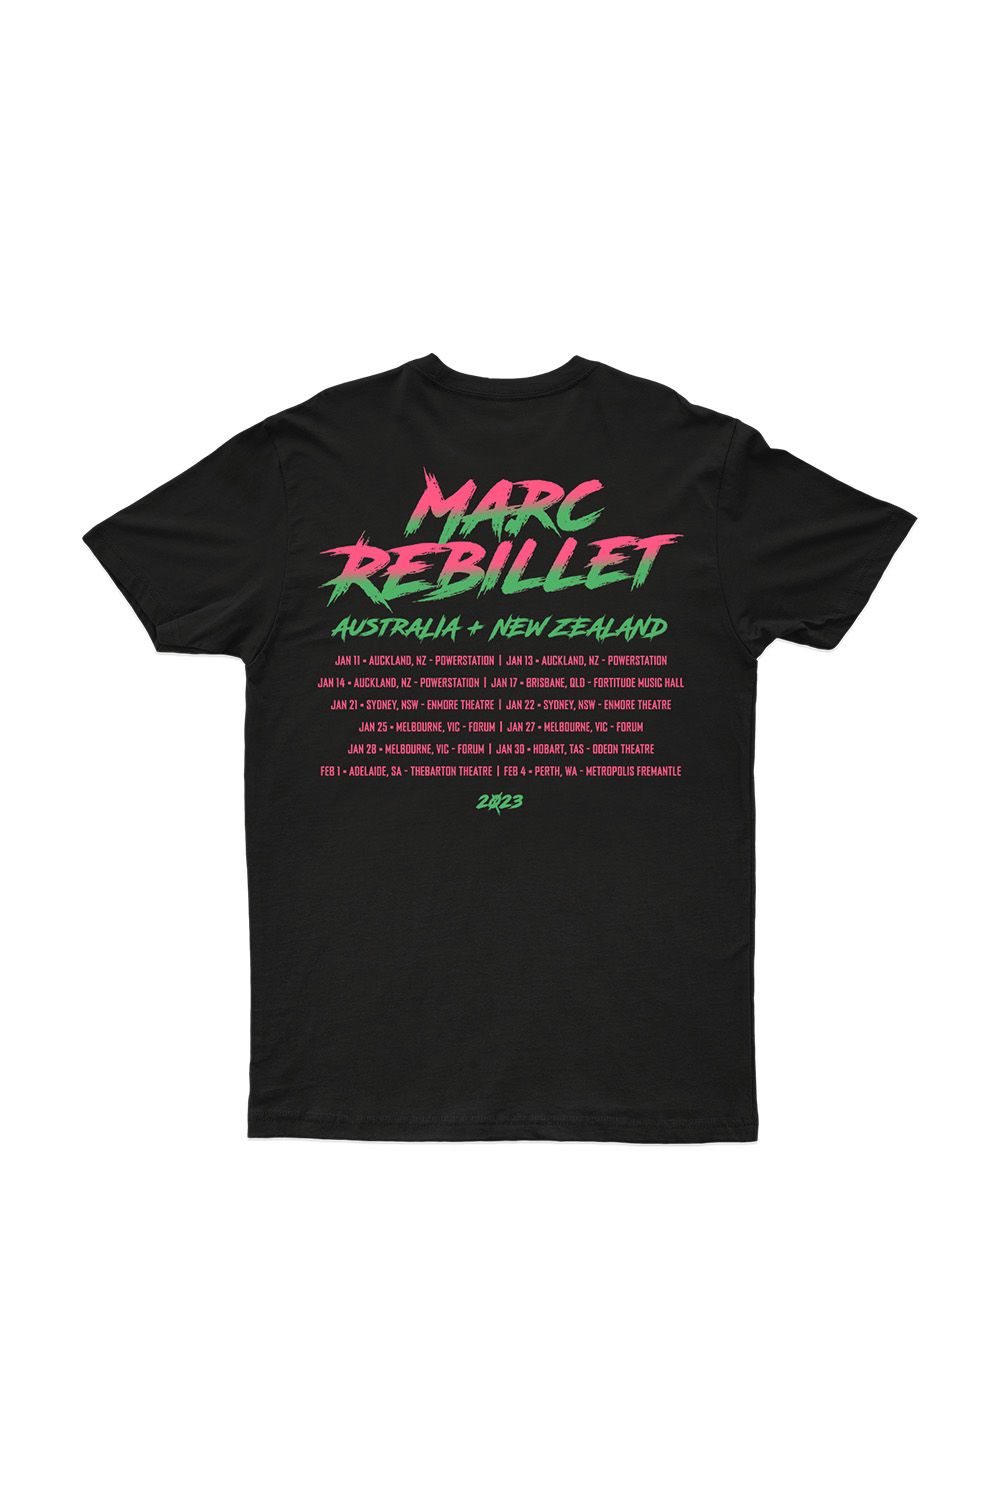 Marc Rebillet — Marc Rebillet Official Merchandise